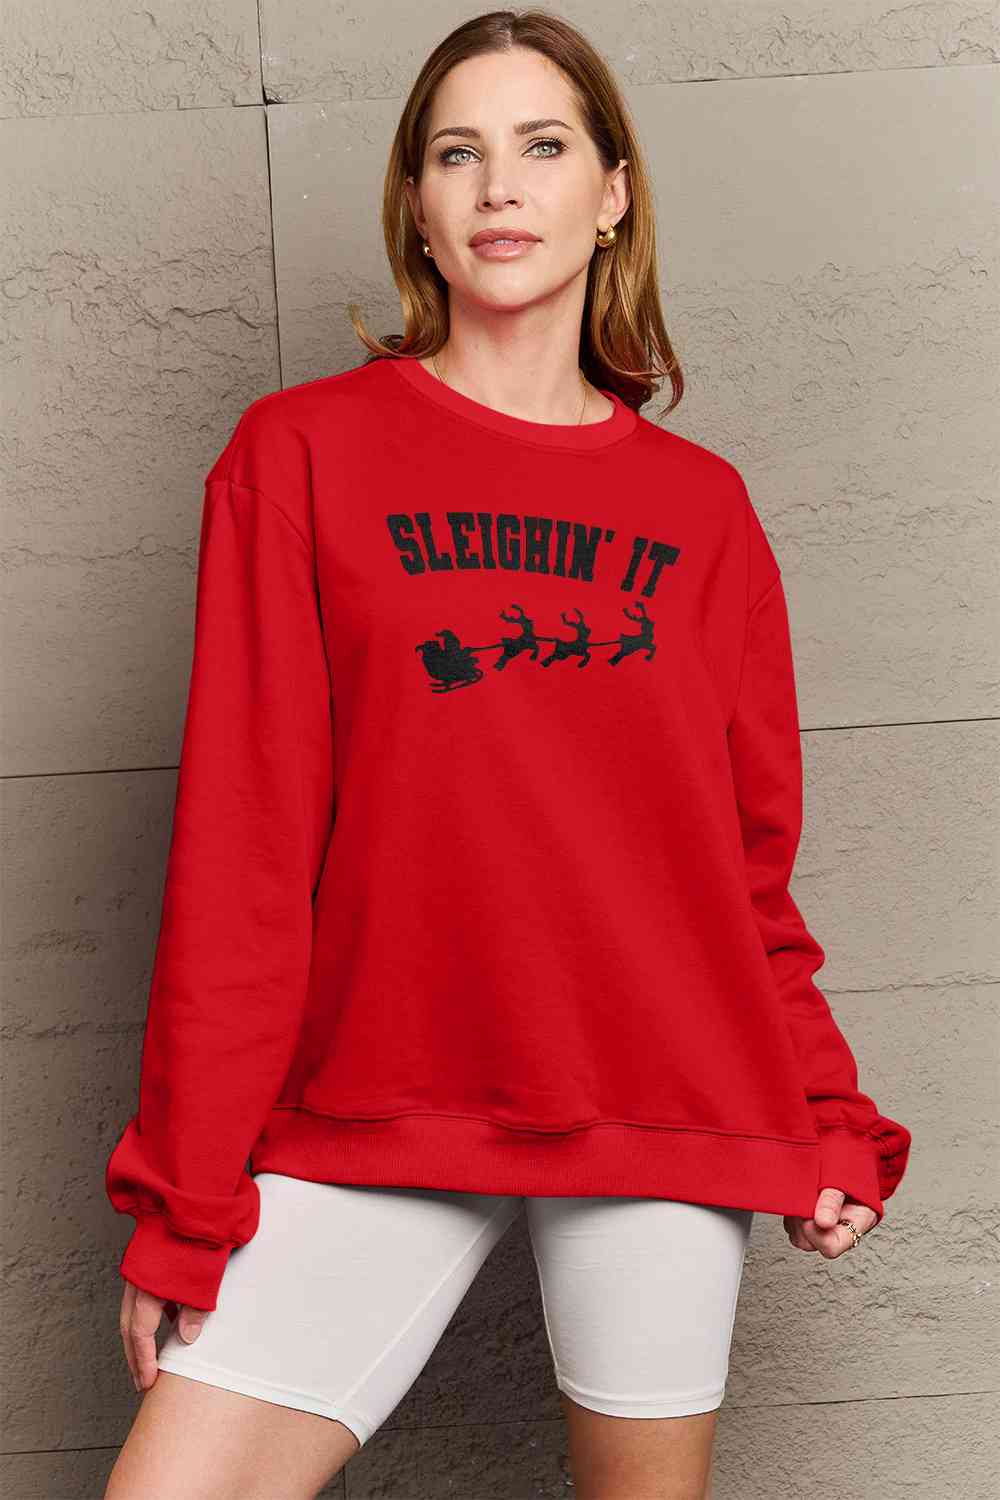 Simply Love Full Size SLEIGHIN' IT Graphic Sweatshirt